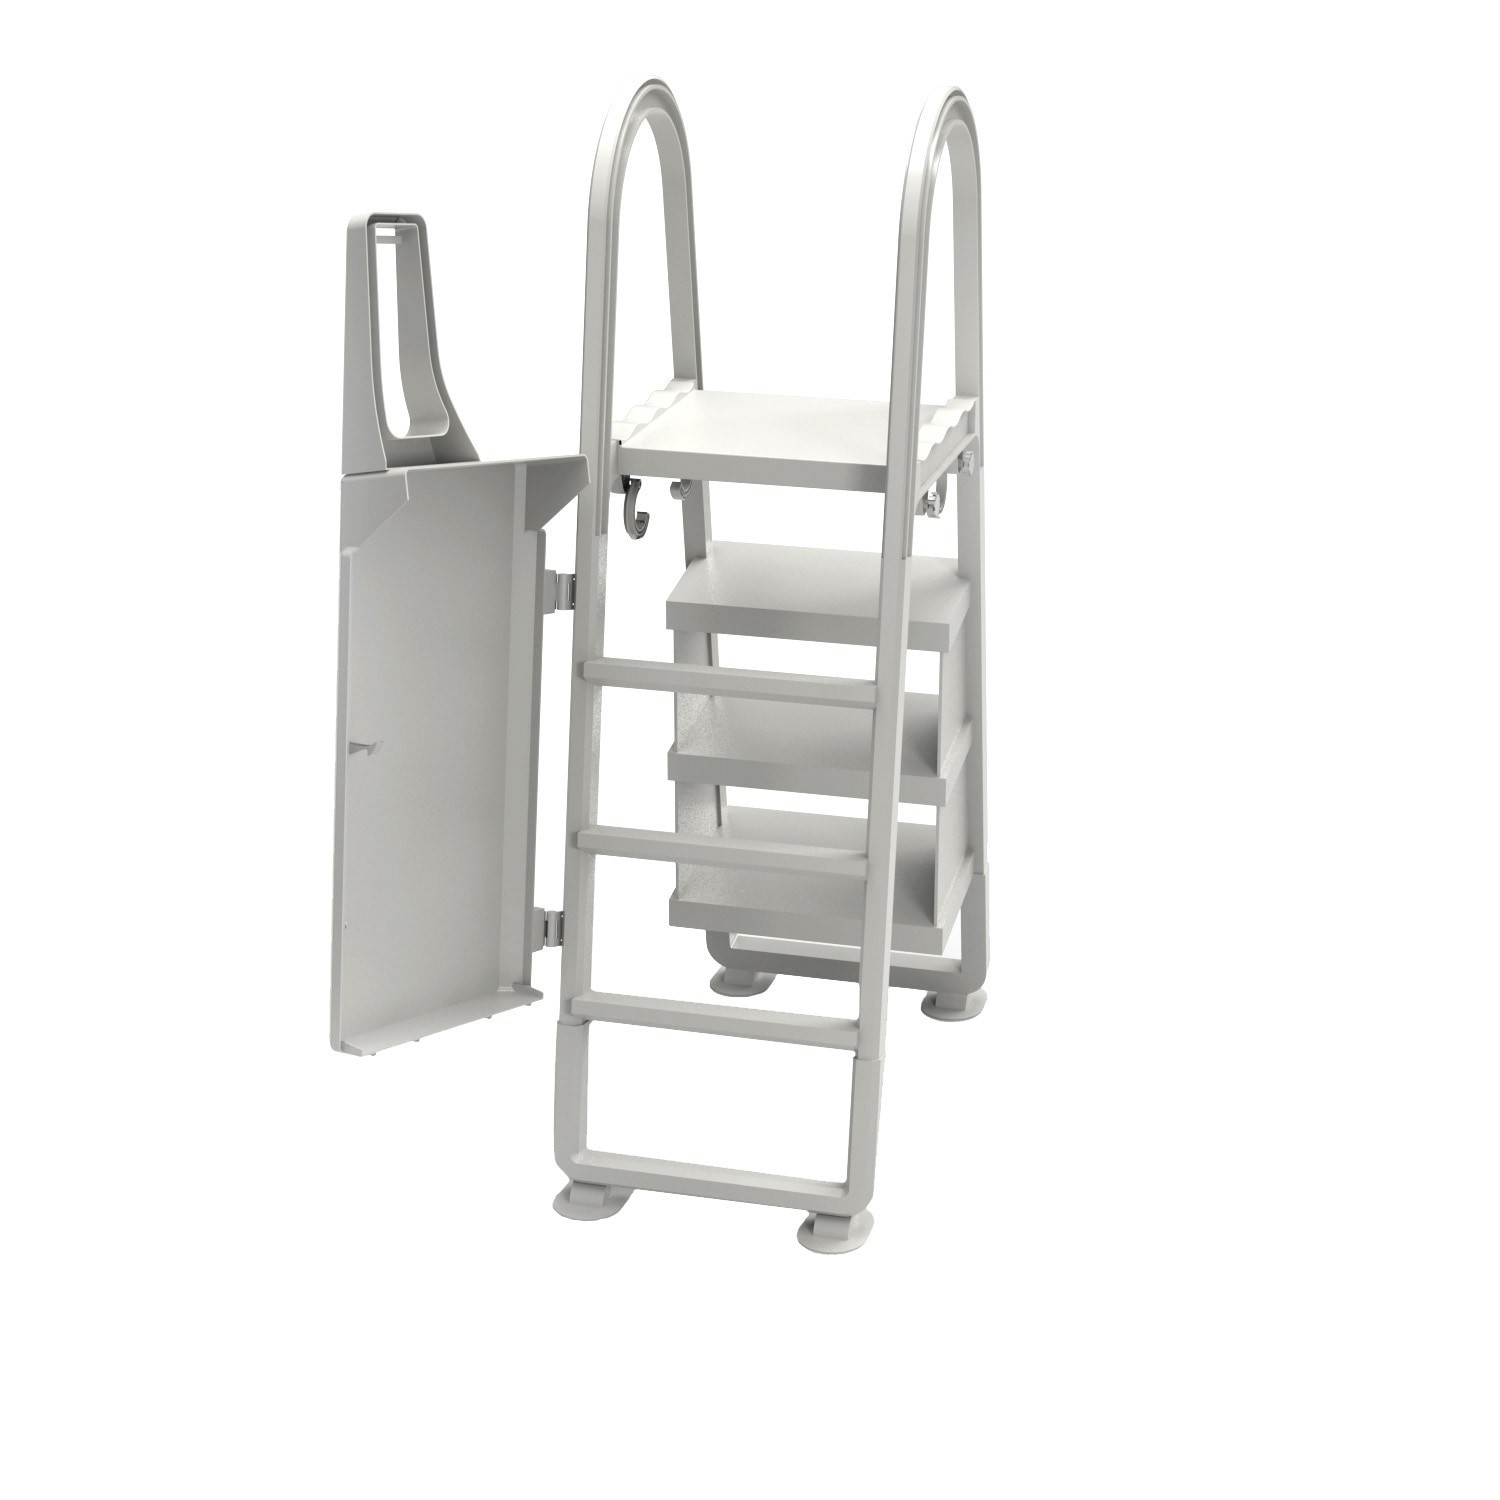 Safety ladder ACM-101AS